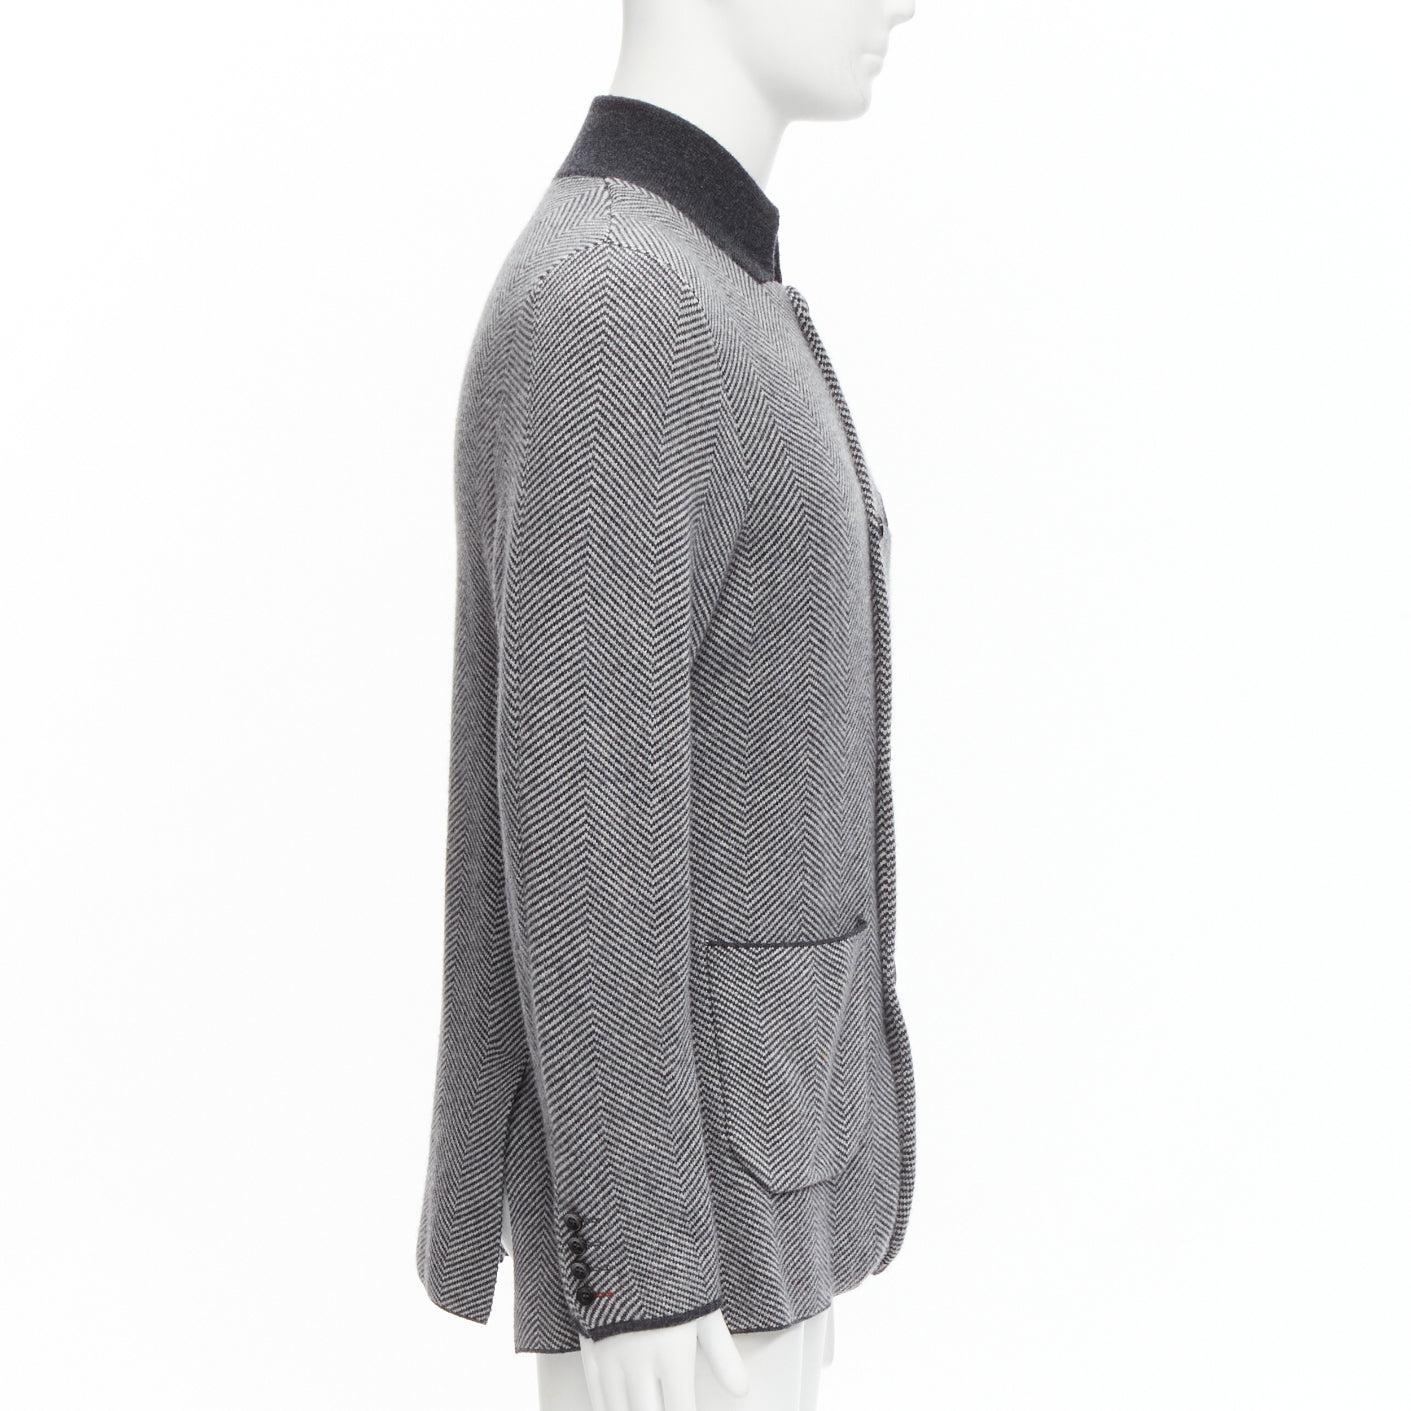 N PEAL 100% cashmere grey herringbone black collar trim cardigan jacket M 1